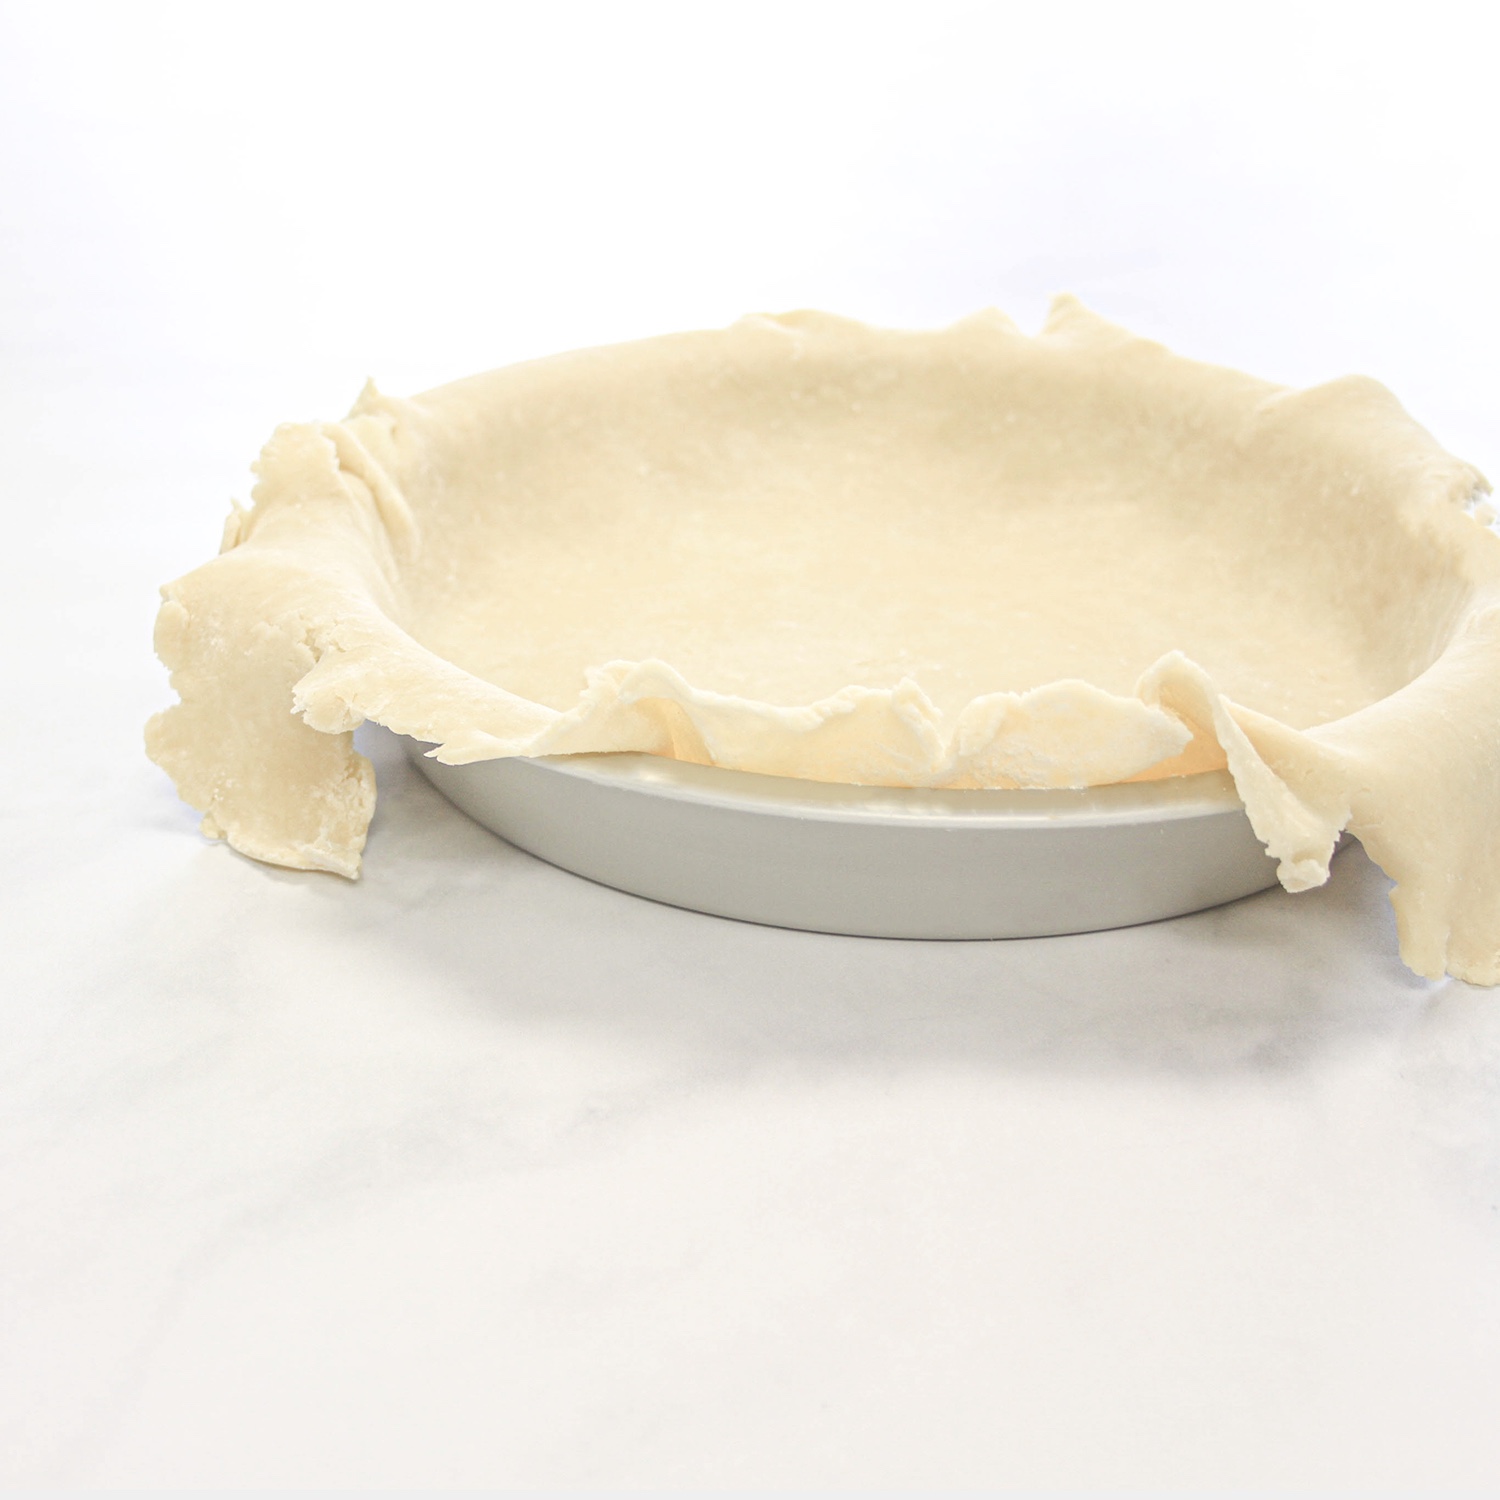 Pie crust in a pie pan